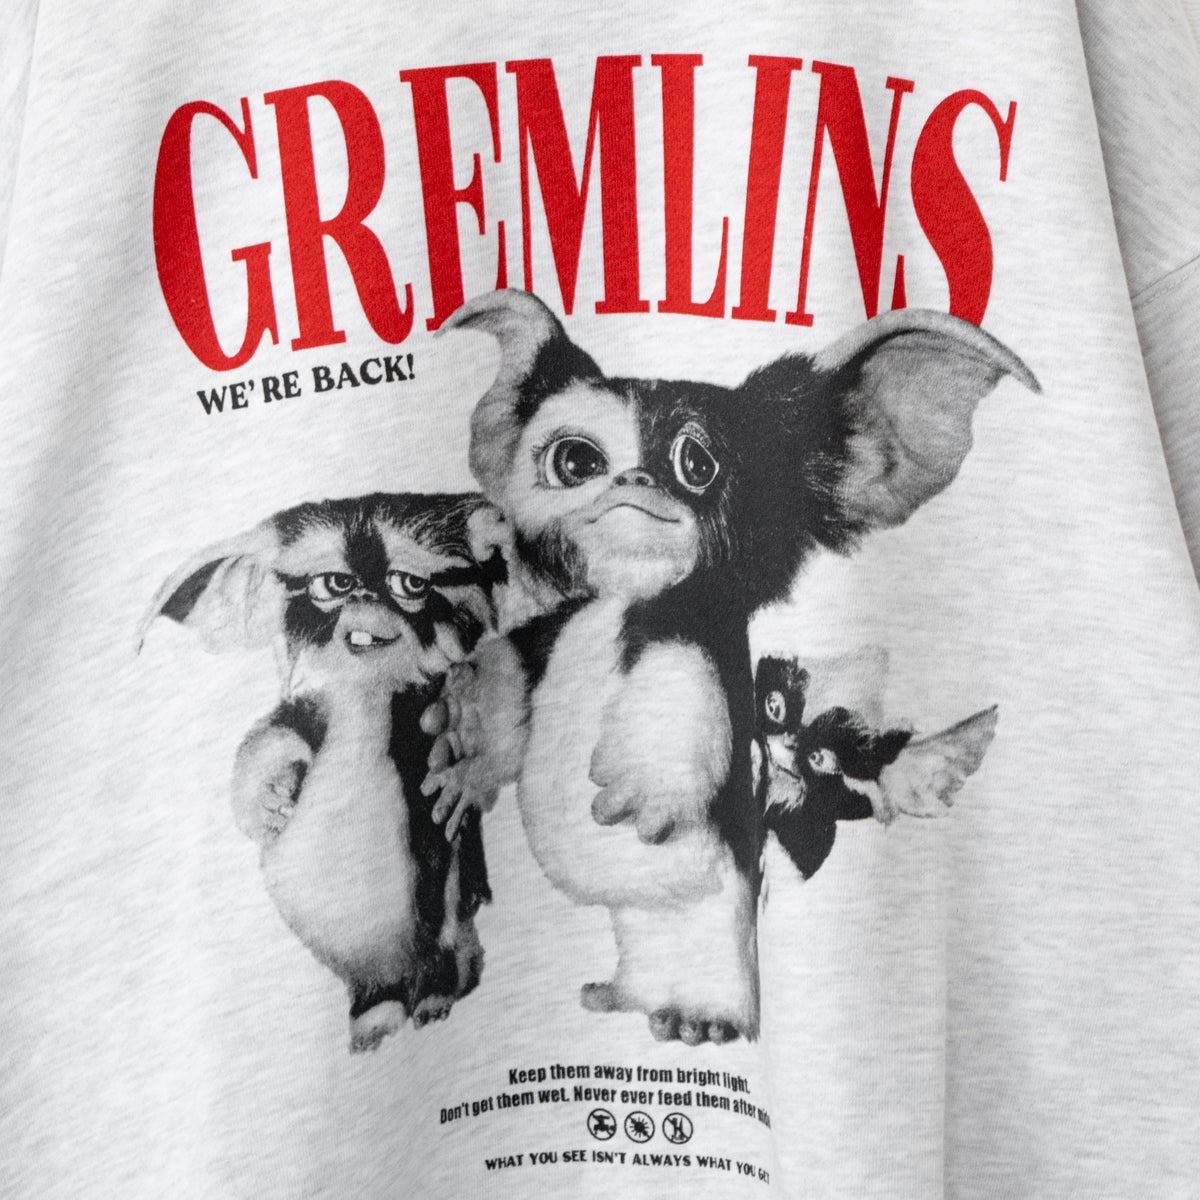 GREMLINS Gremlins Photo Print Fleece Sweatshirt Unisex Kinari IVORY